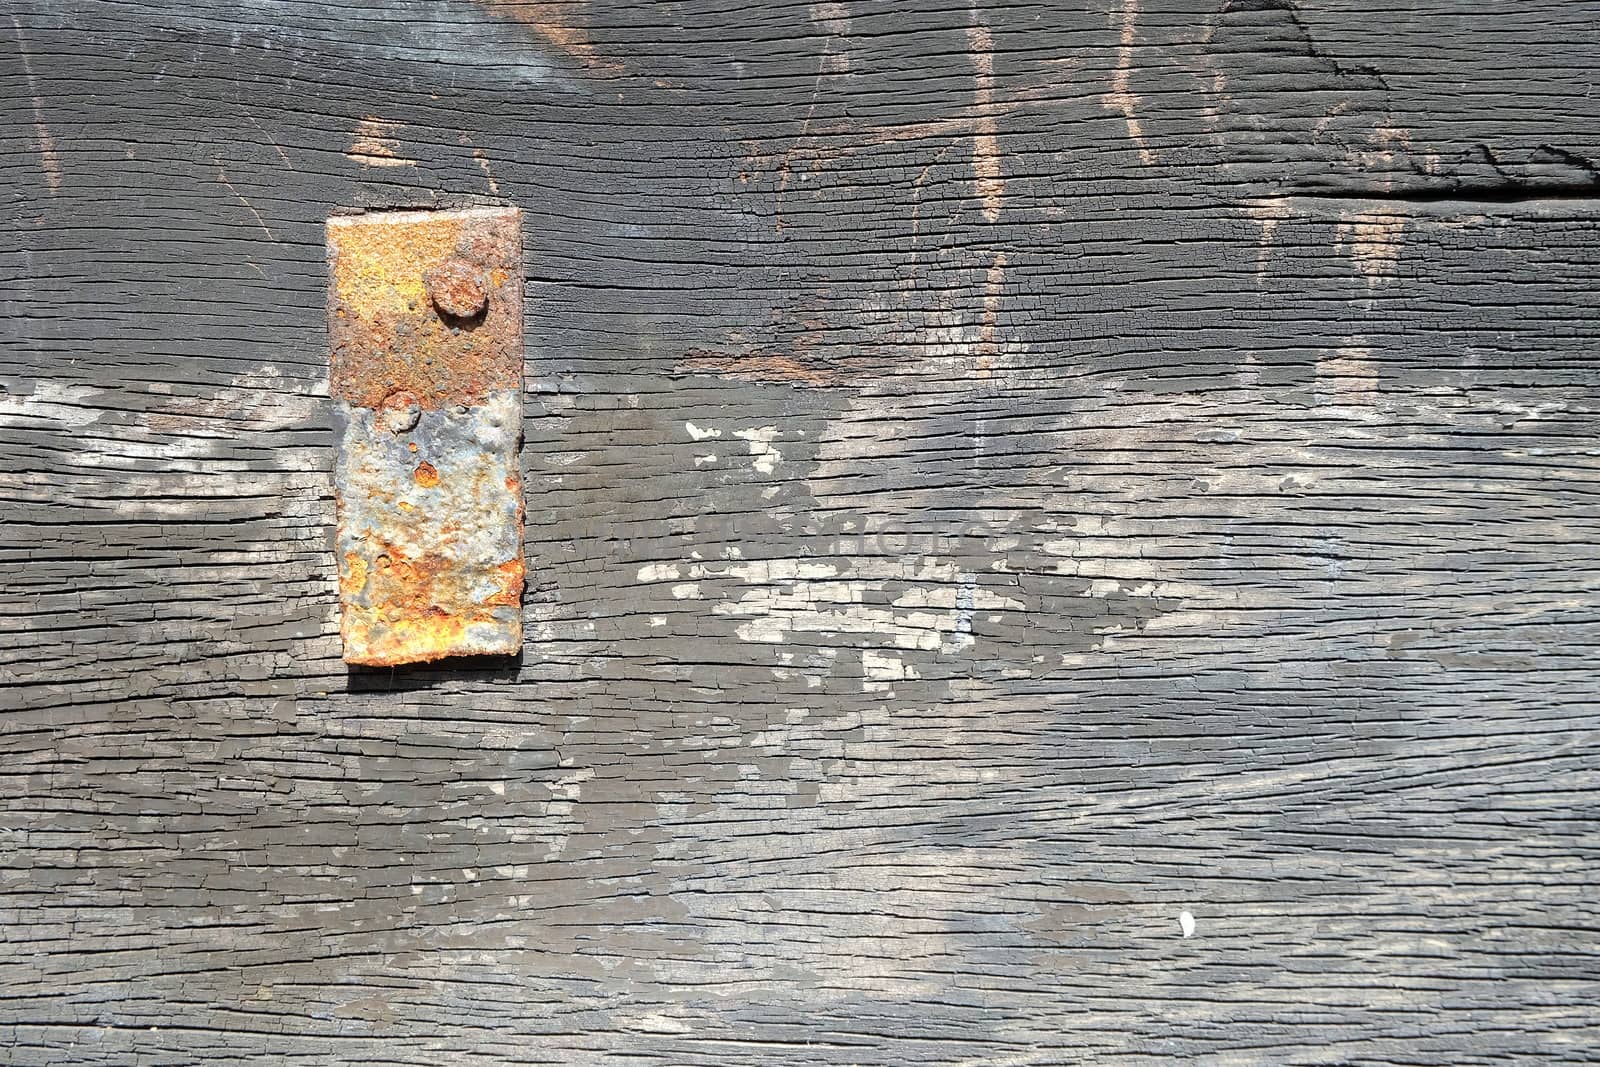 Rusty Piece of Metal on Old Wood Board.